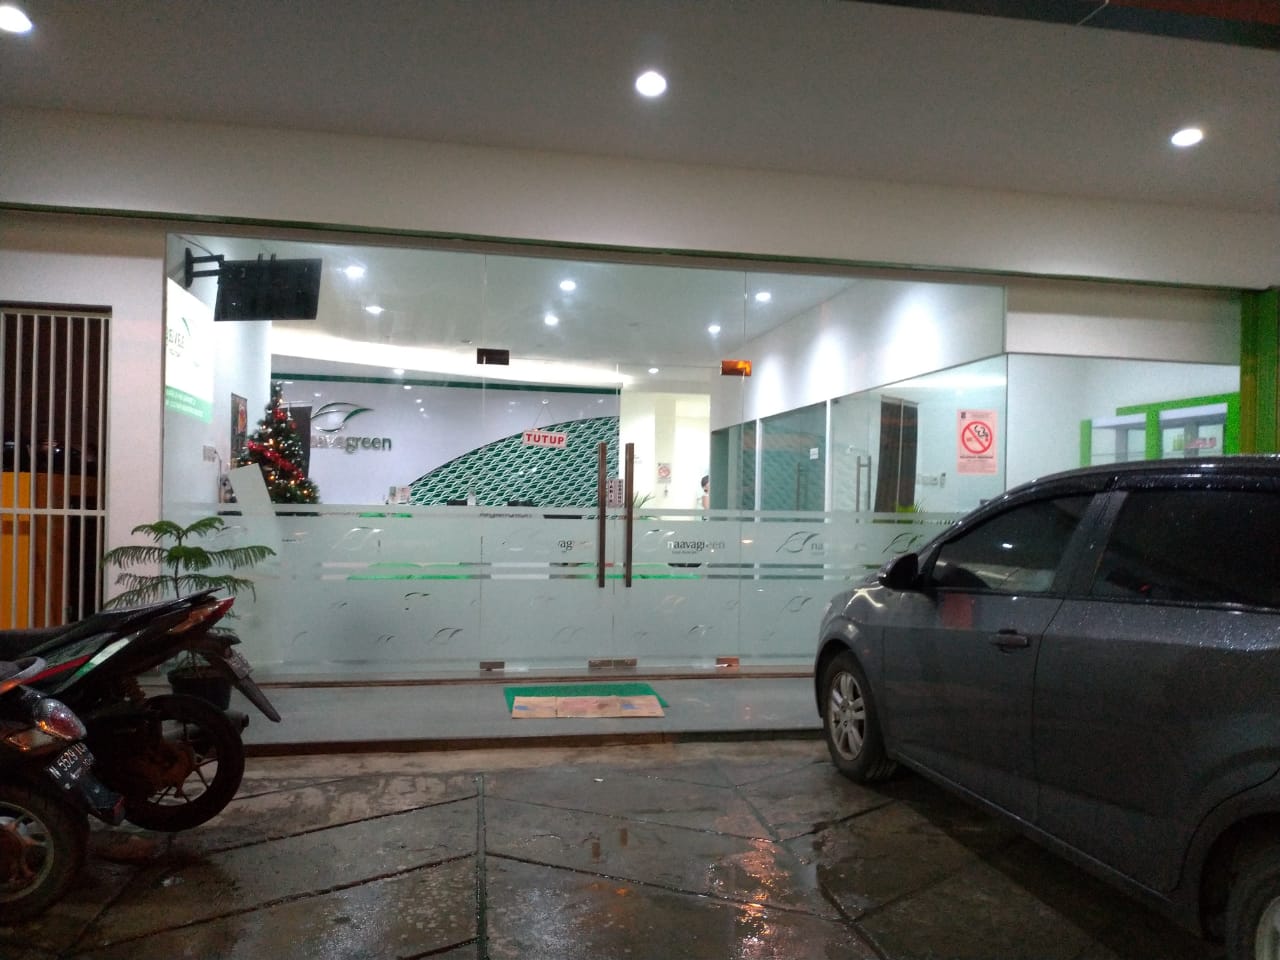 Pengalaman Pertama Kali Treatment Acne Di Naavagreen Surabaya [ REVIEW ]